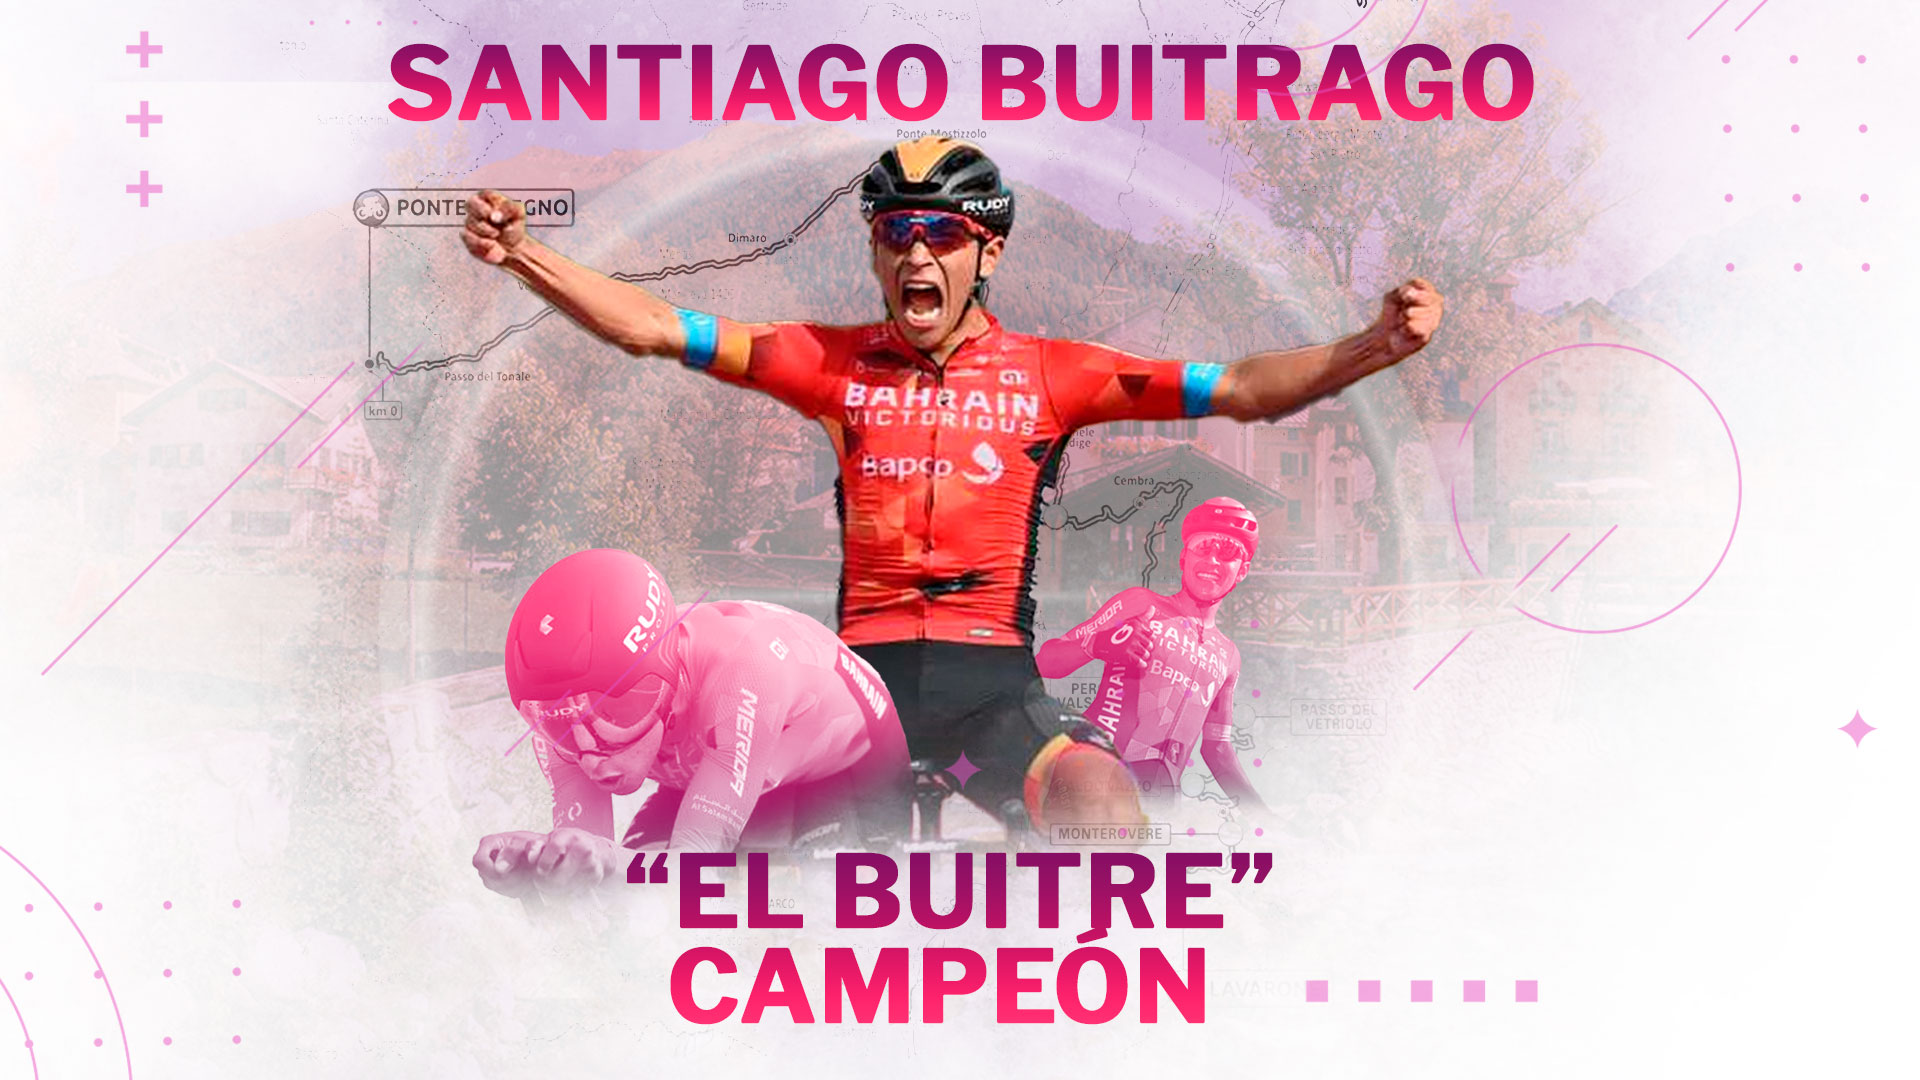 Santiago Buitrago ‘El Buitre’ que voló en el Giro de Italia